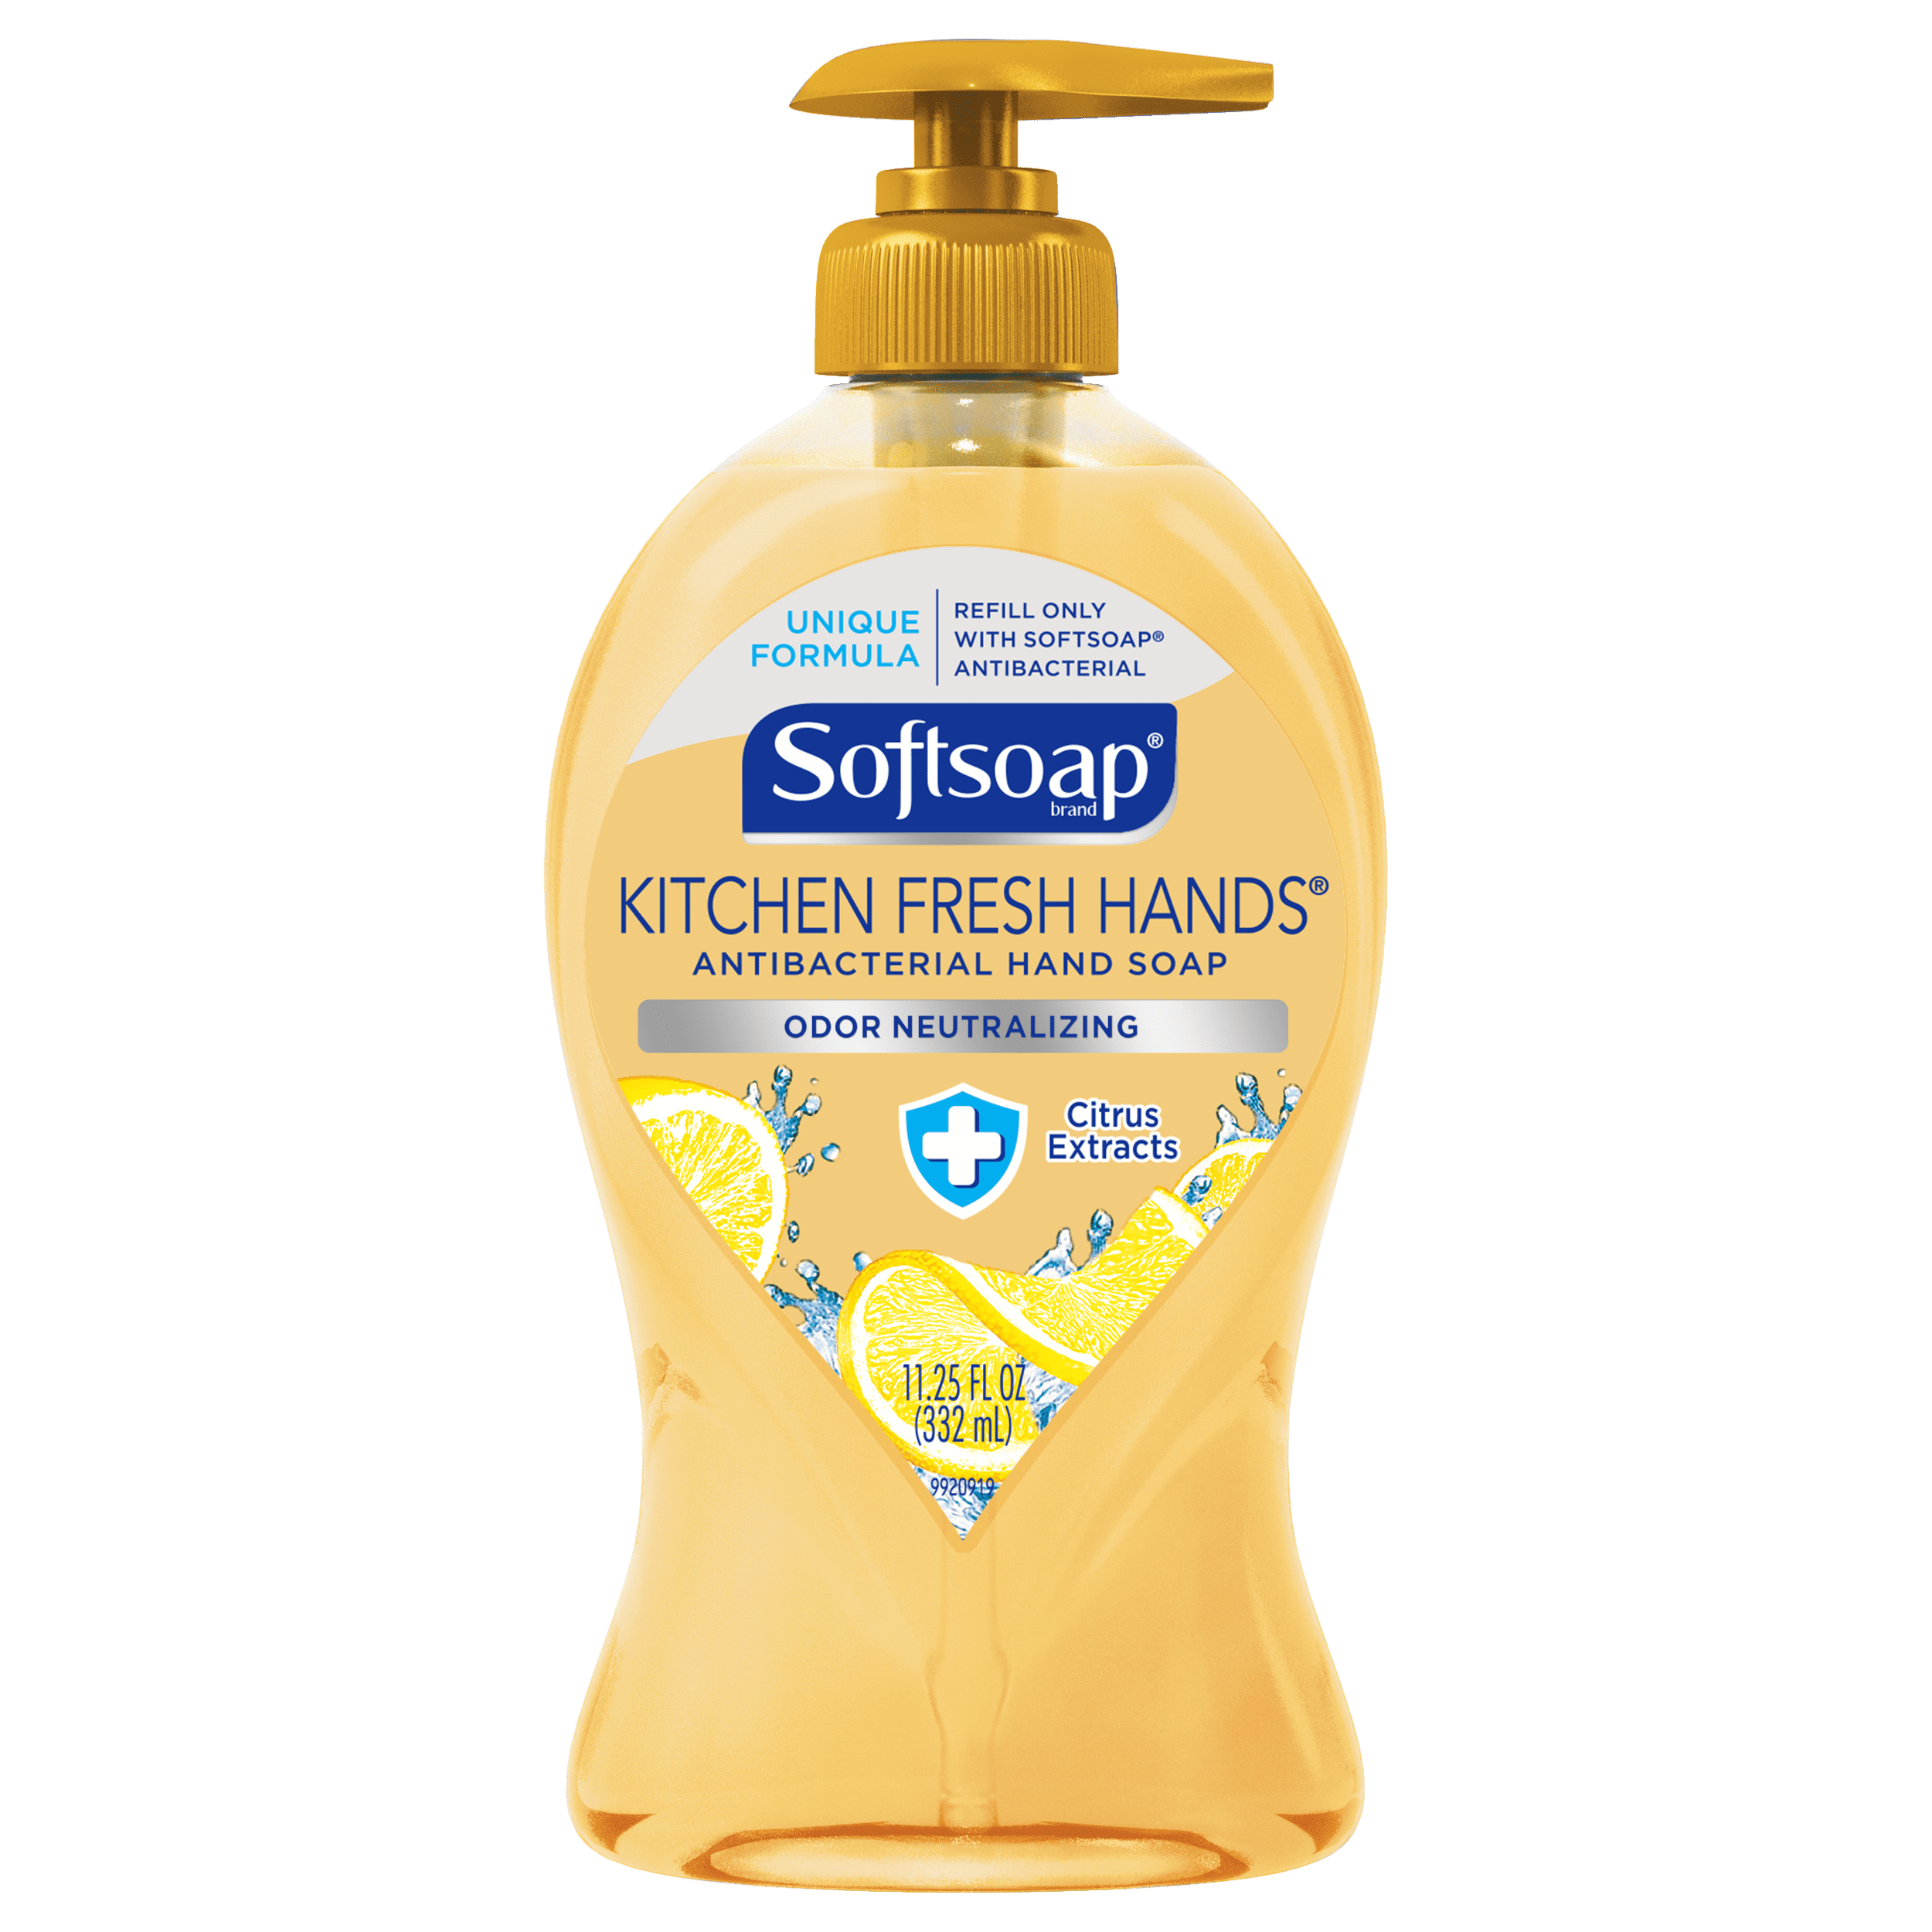 Softsoap Antibacterial Hand Soap, Kitchen Fresh Hands - 11.25 fl oz